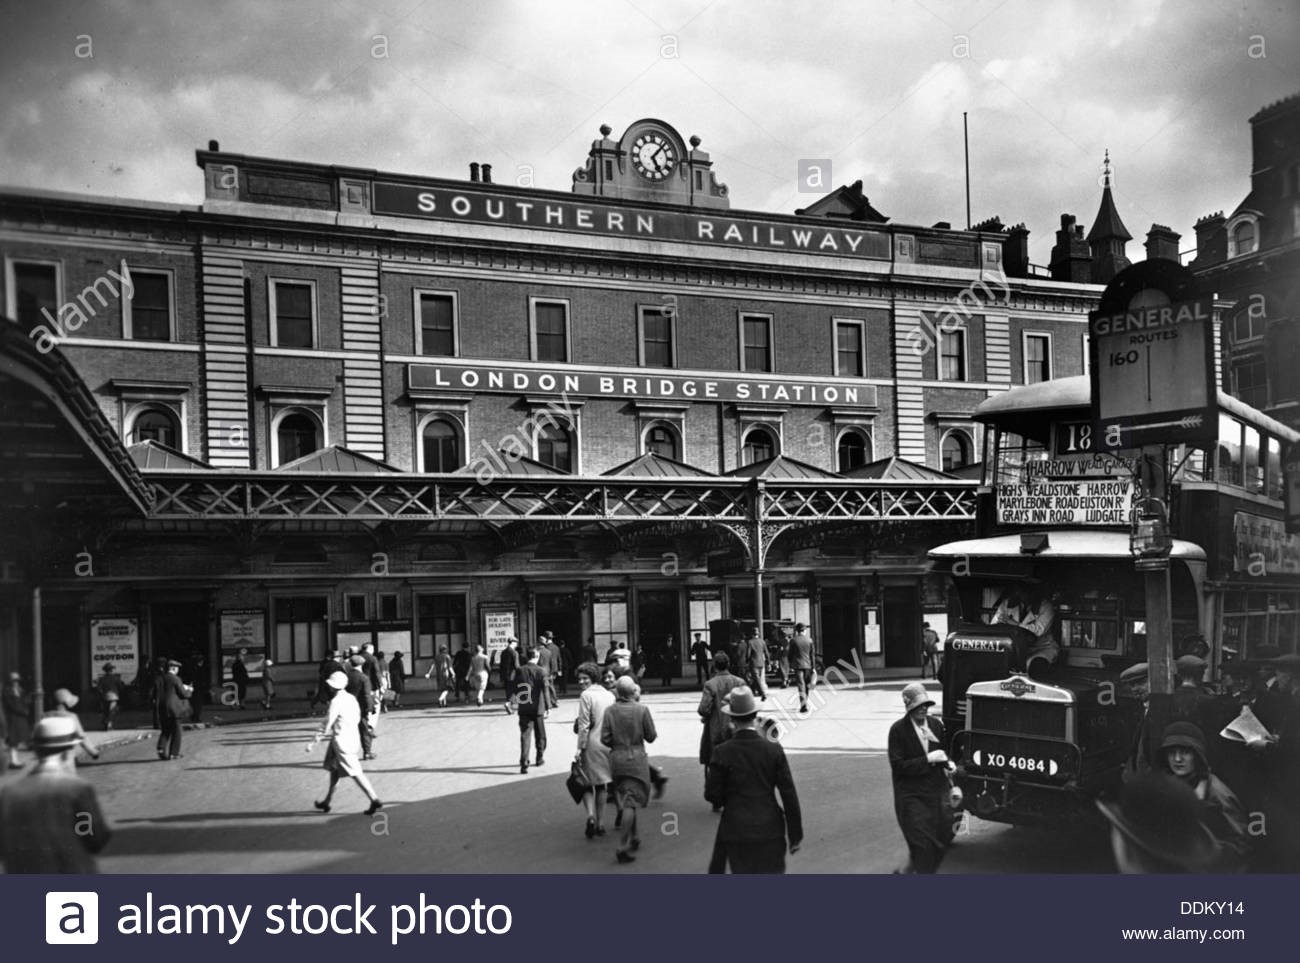 London Bridge Station, Southwark, London, c1930.jpg